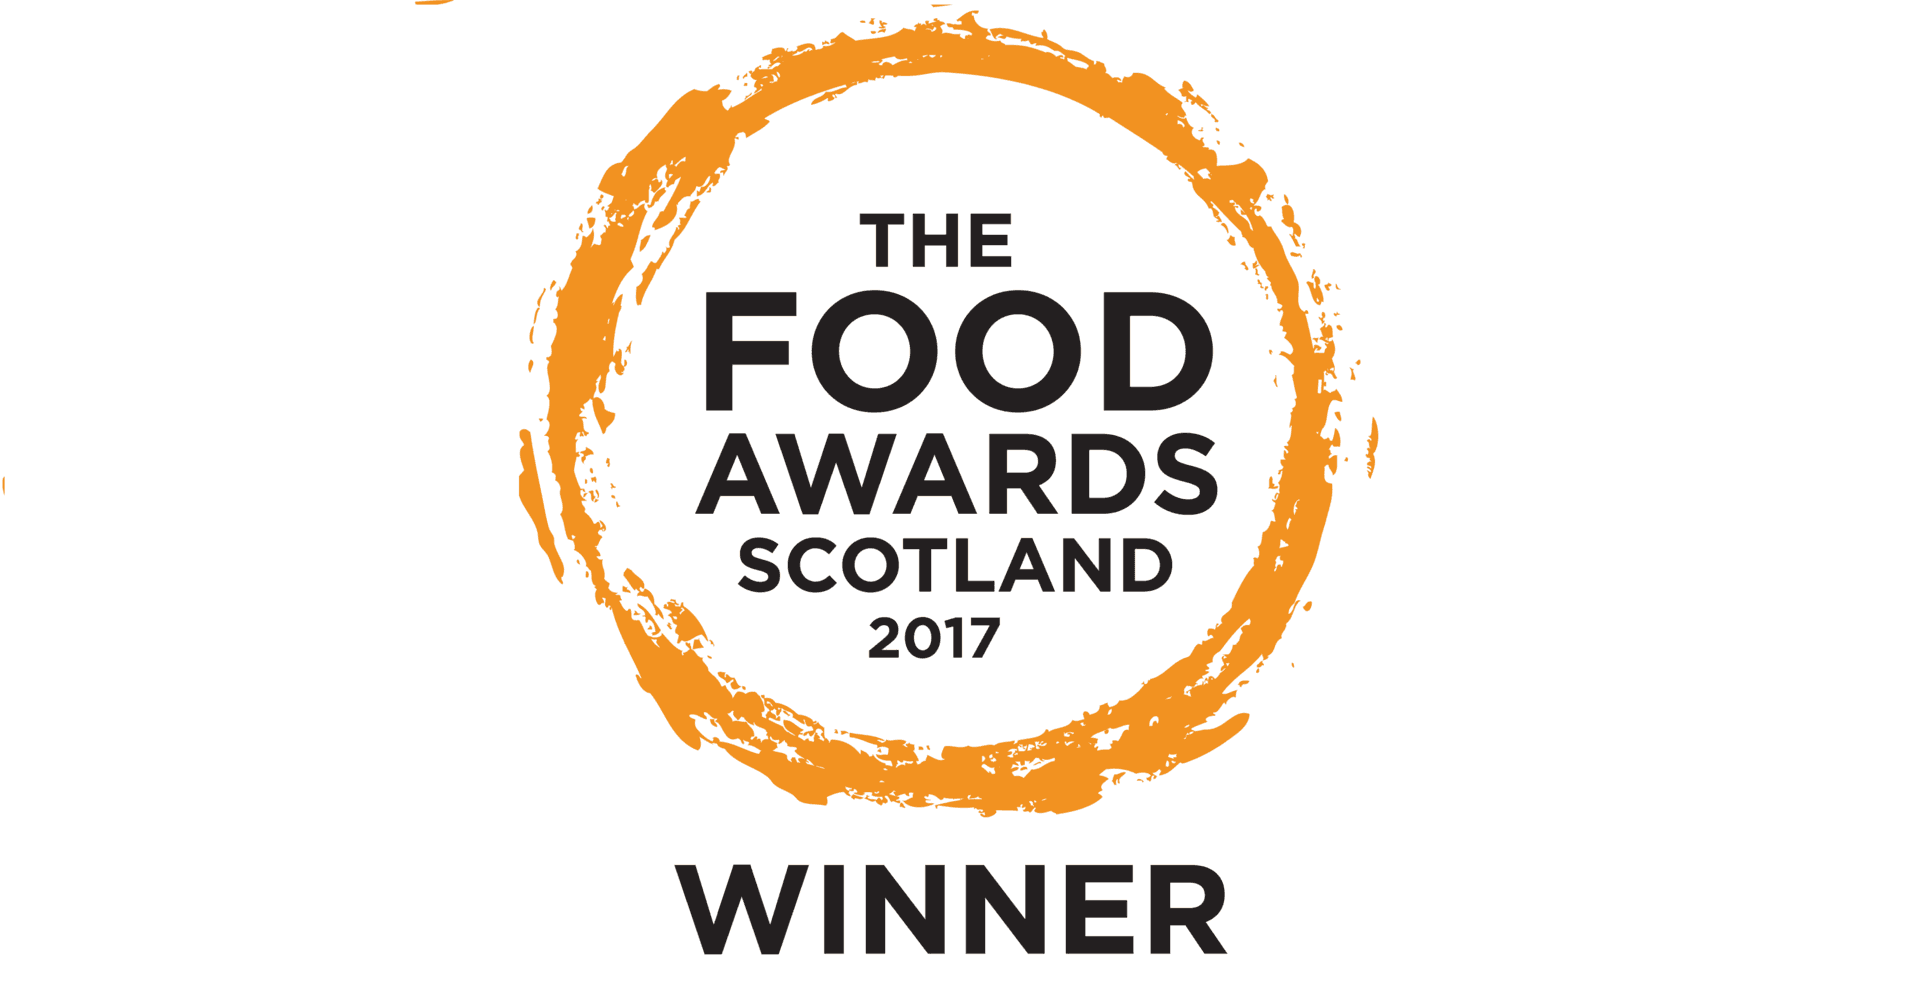 The Food Awards Scotland 2017